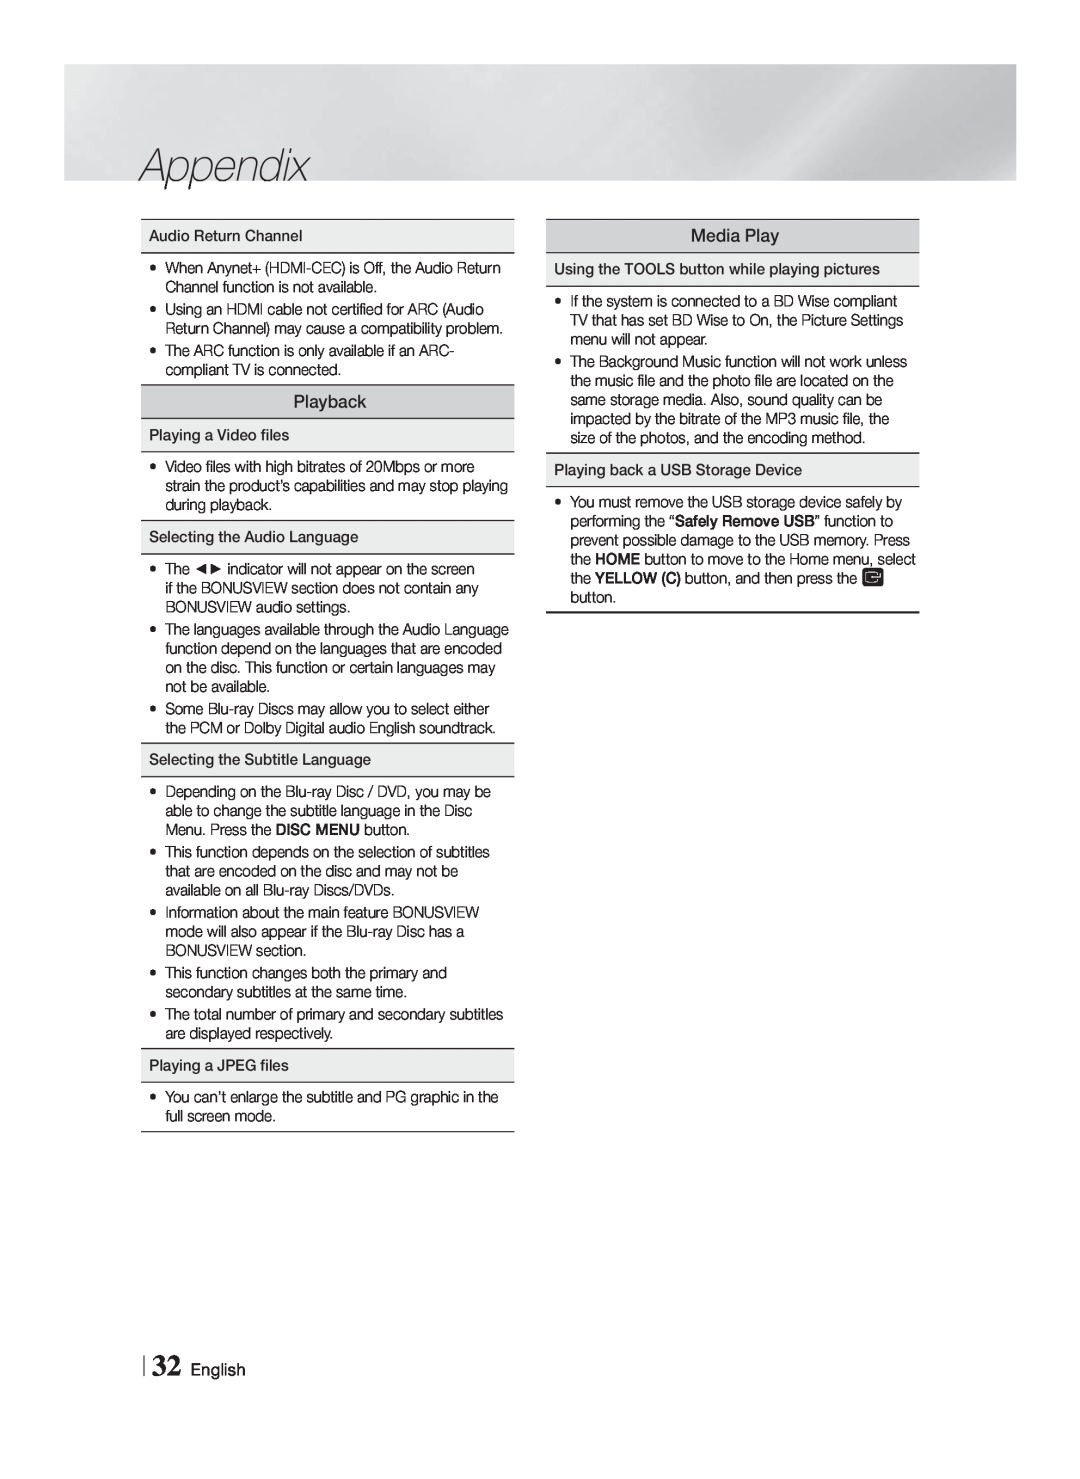 Samsung HTF4500ZA user manual Appendix, Playback, Media Play, English 